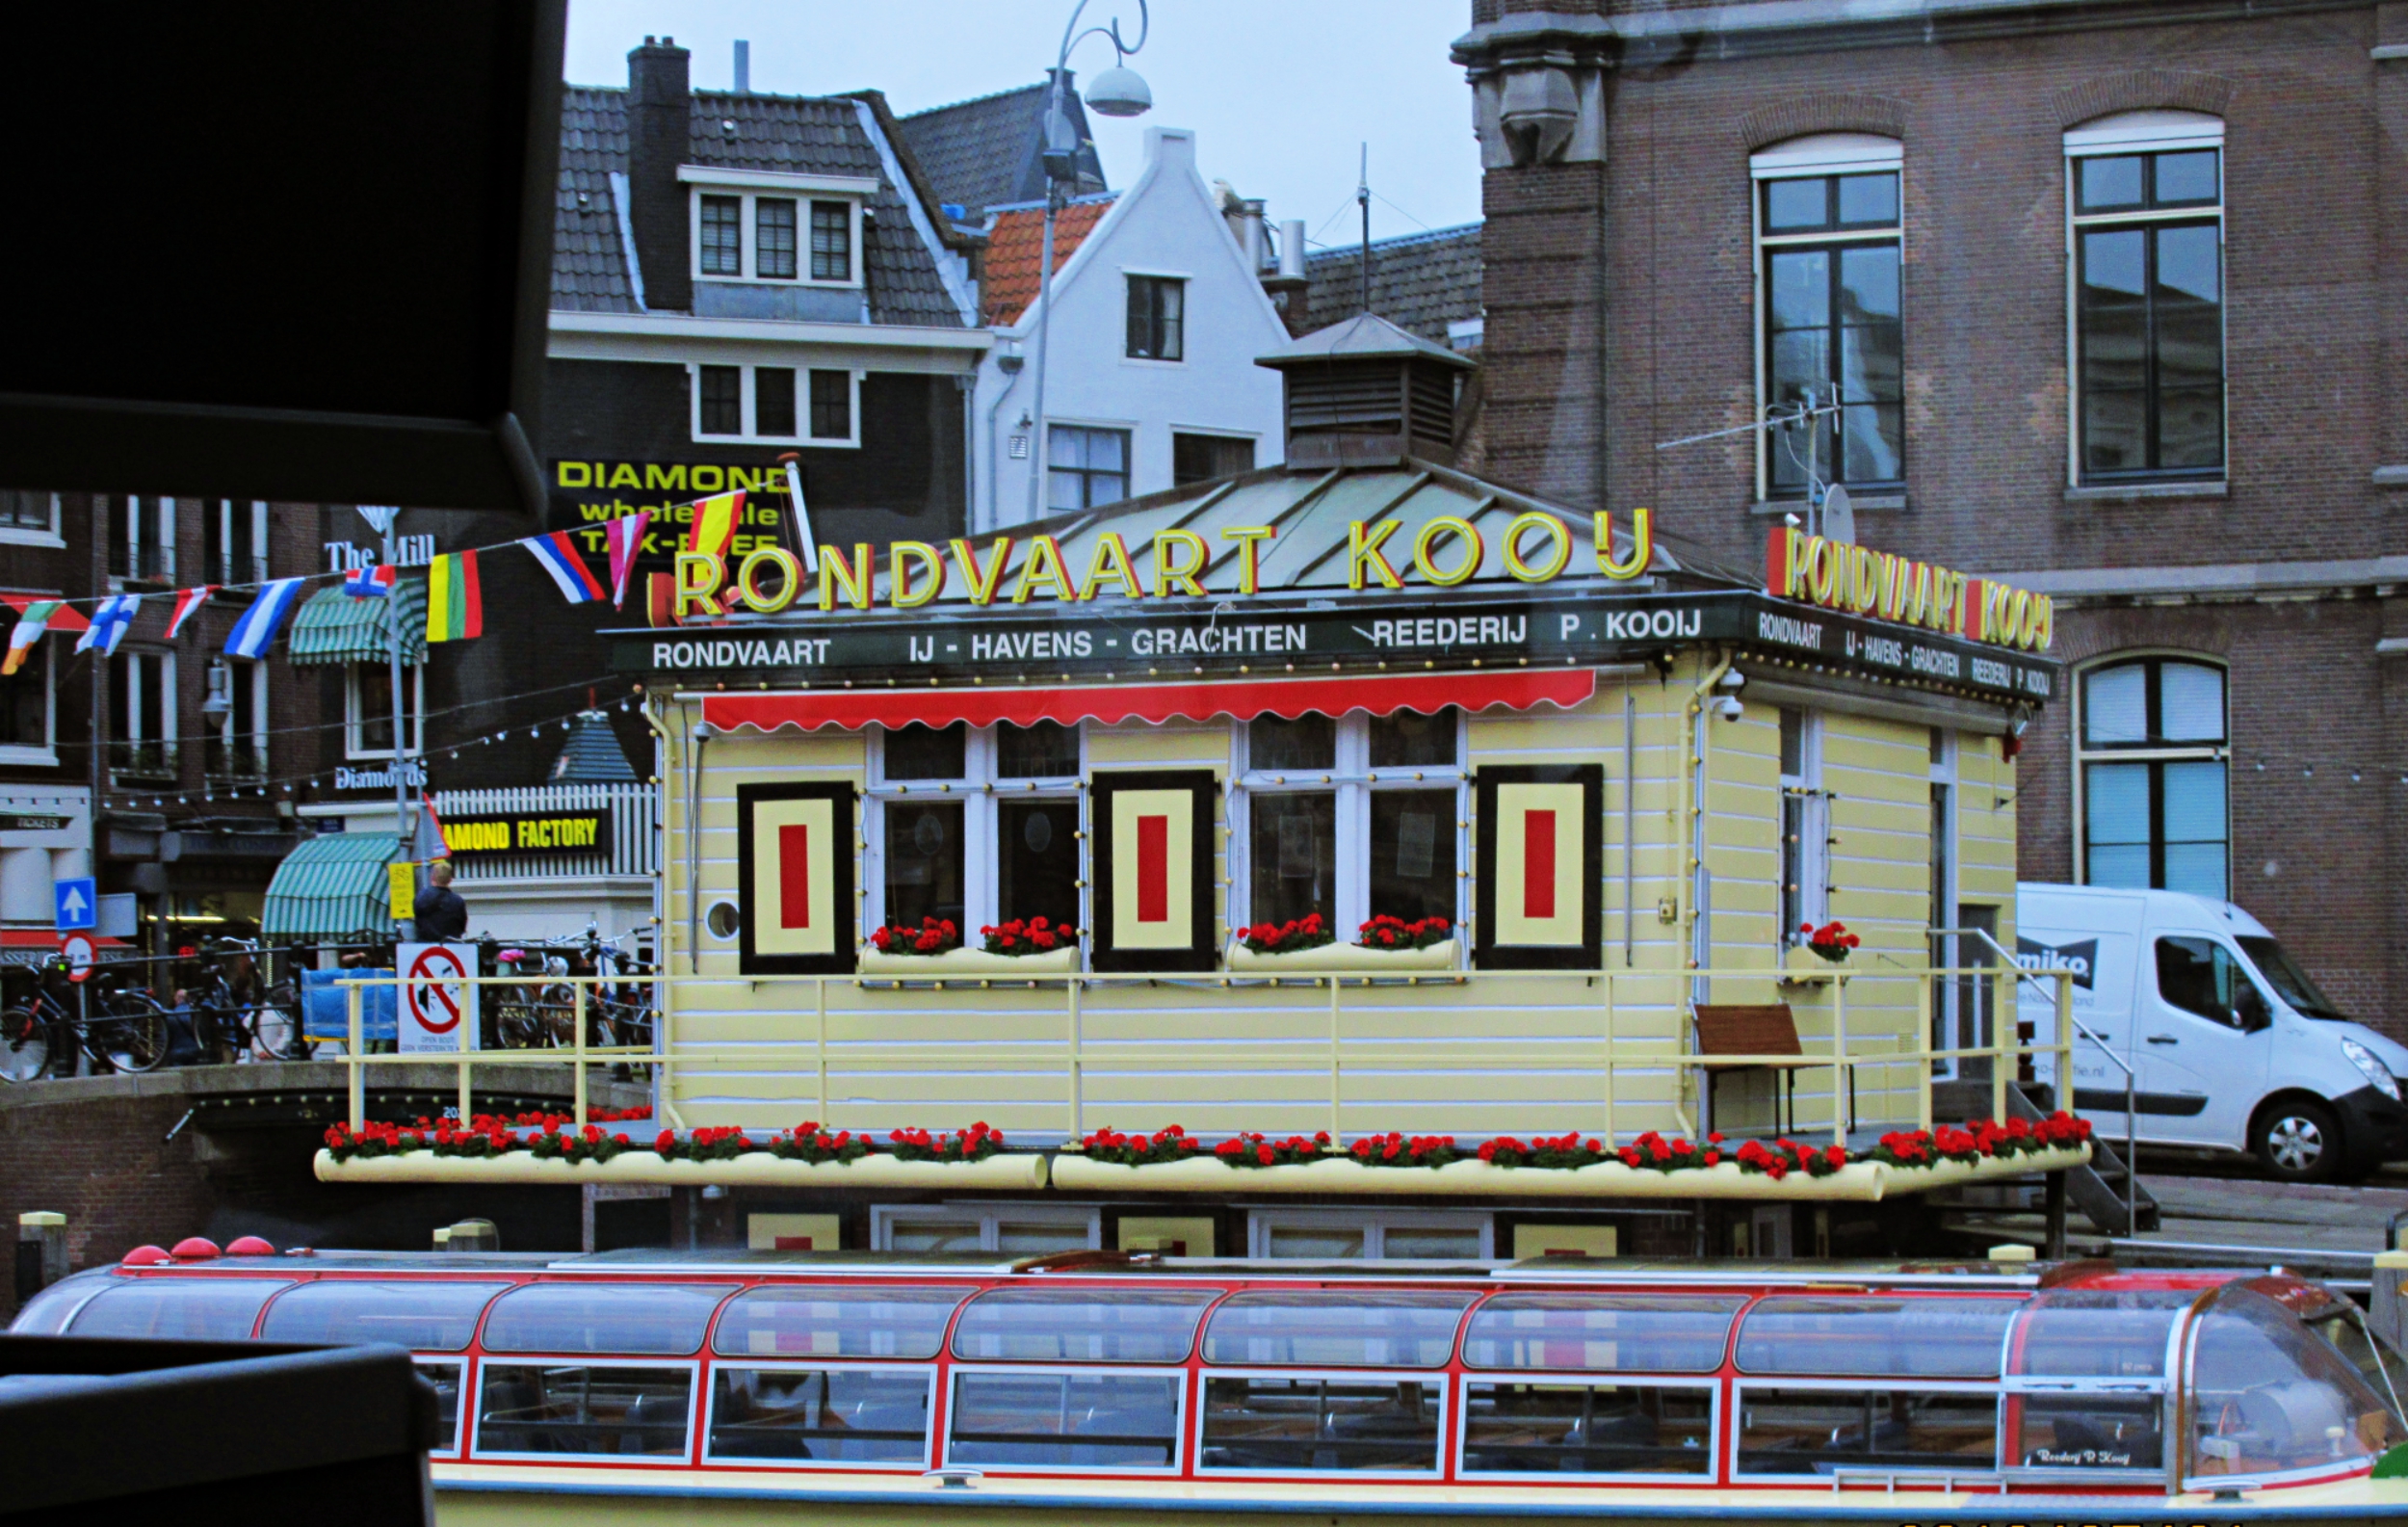 Rondvaart Koou Amsterdam Canal Boat Tour